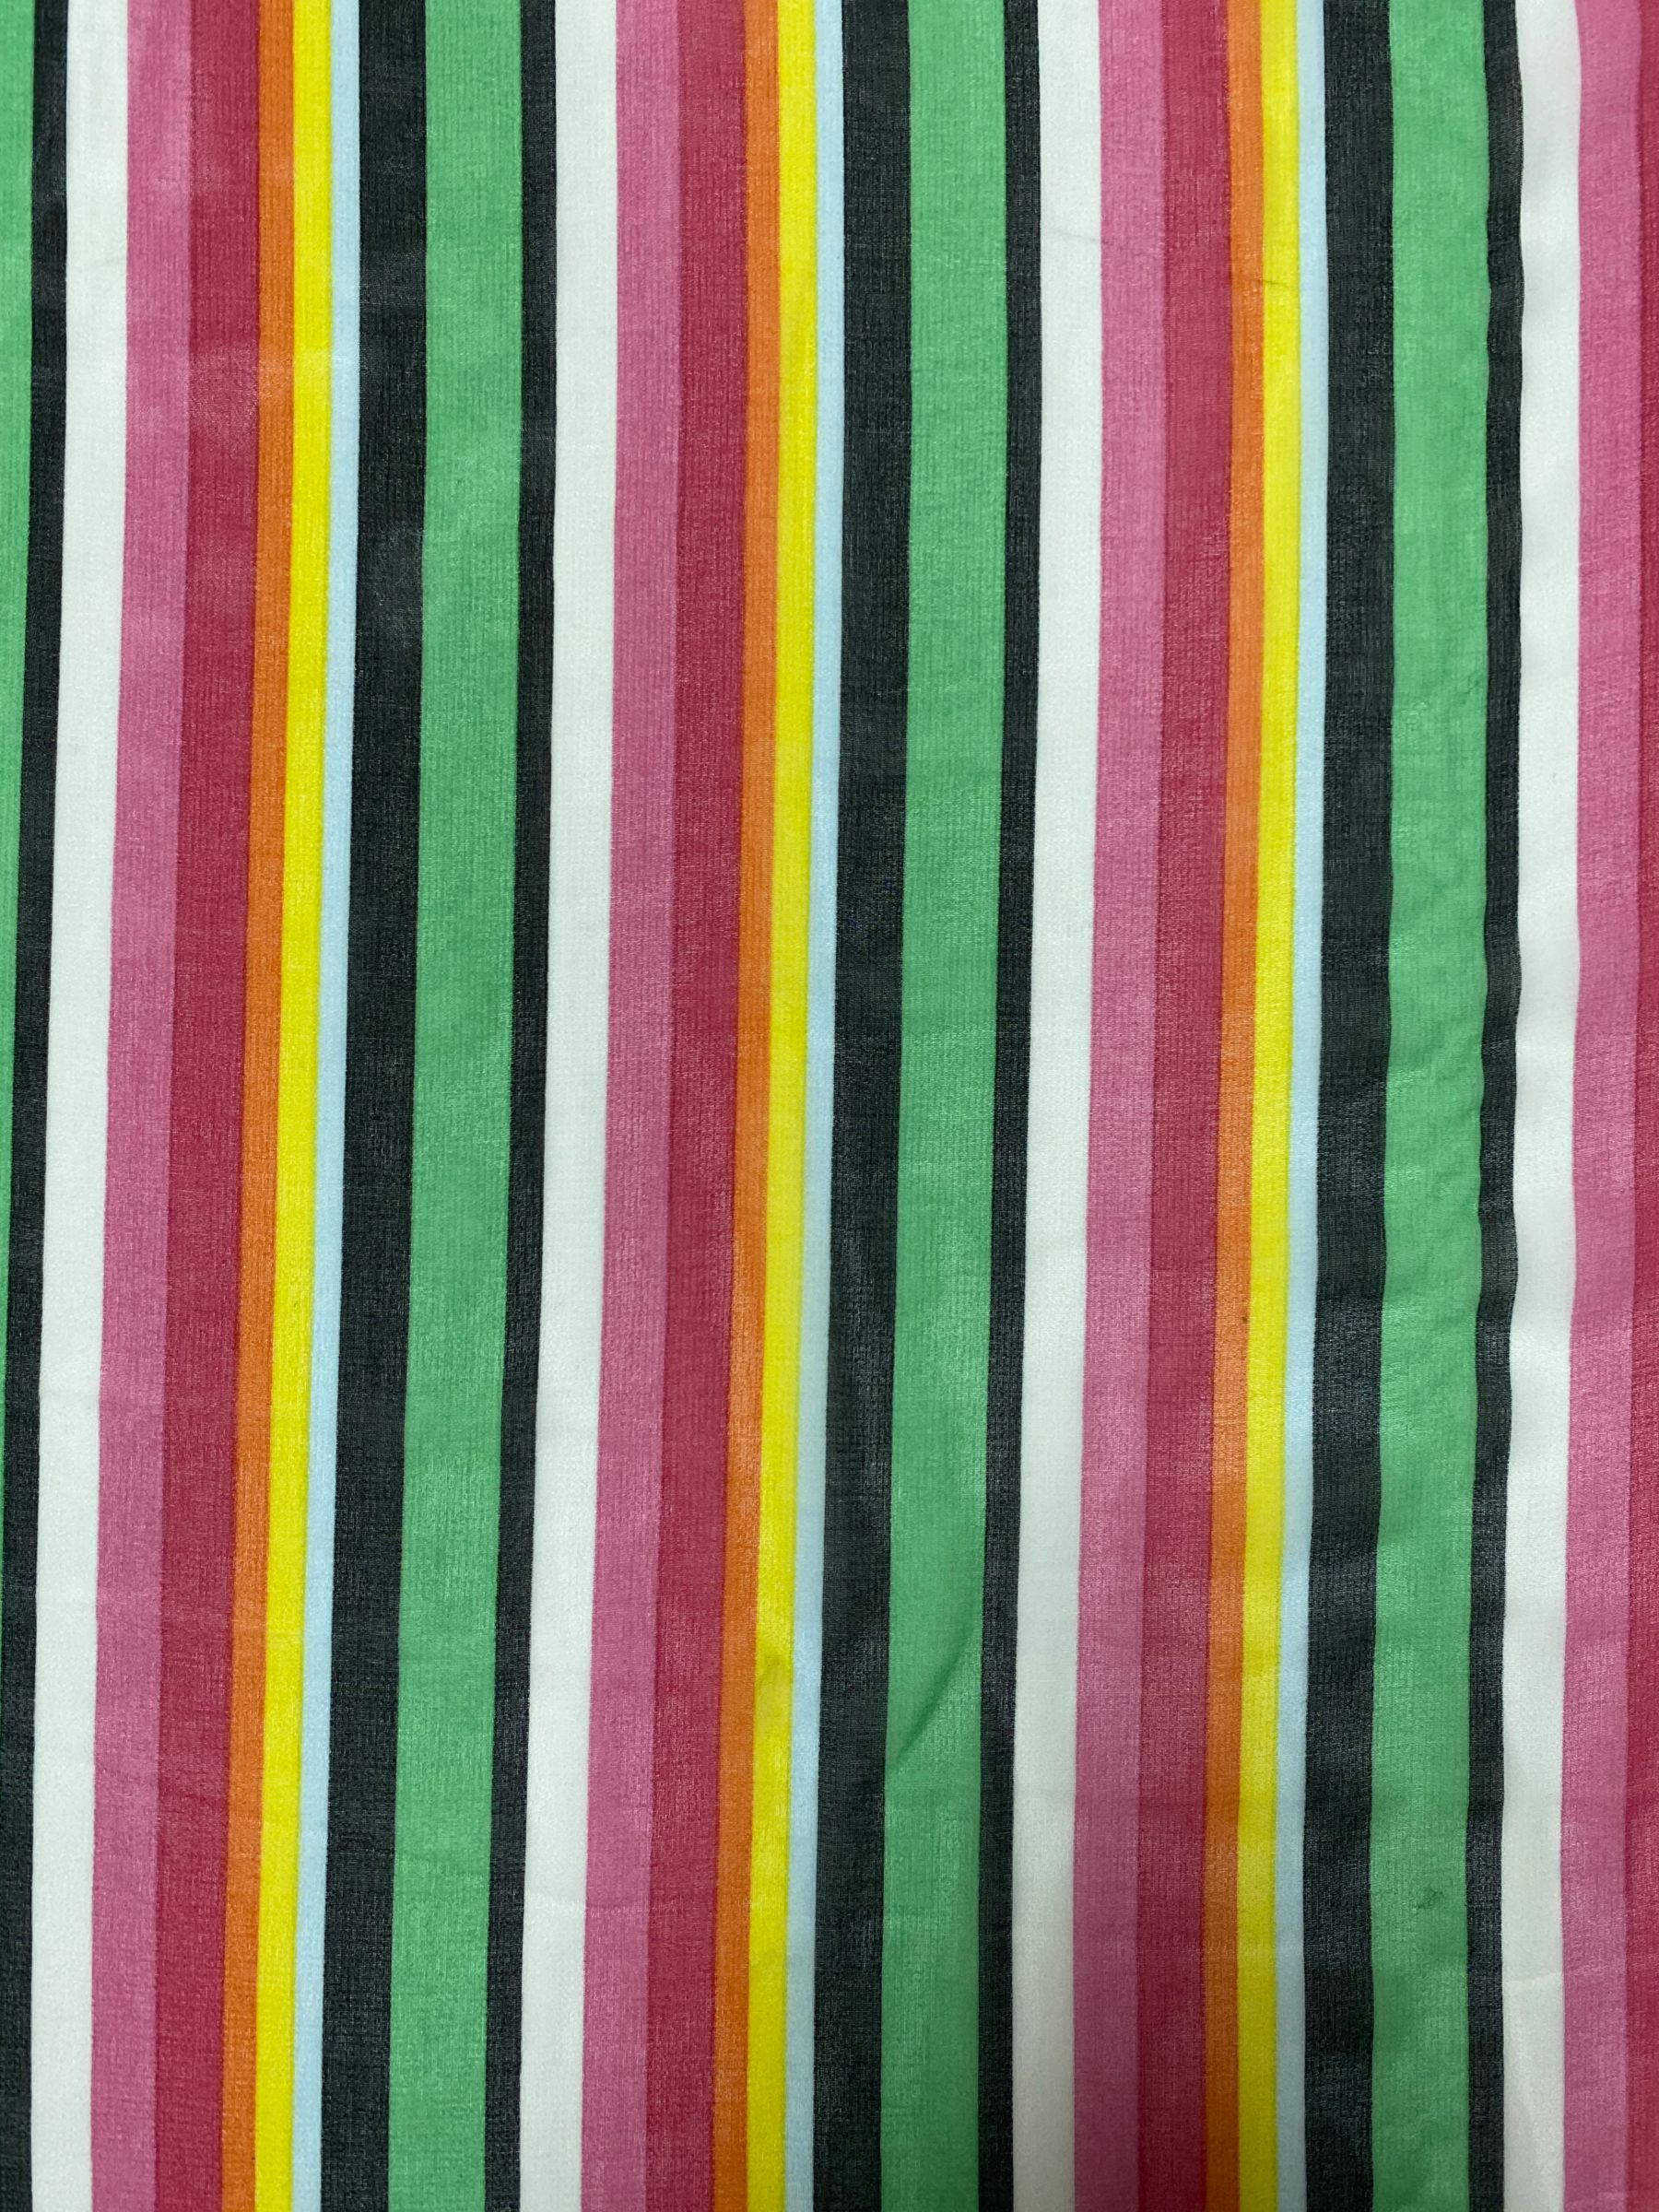 Marvic Fabrics Rainbow Stripe Print Fabric, Multi